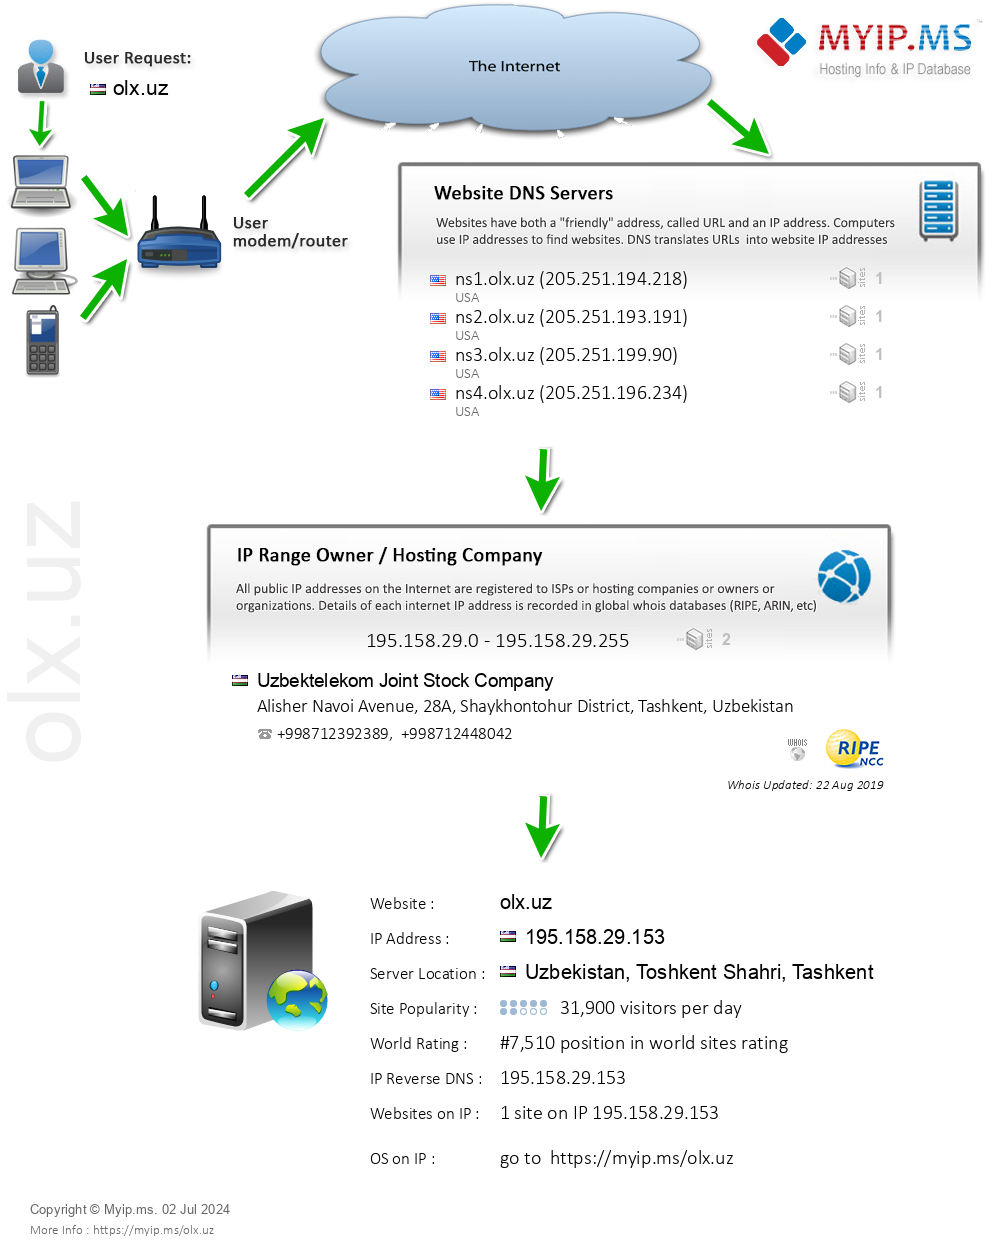 Olx.uz - Website Hosting Visual IP Diagram